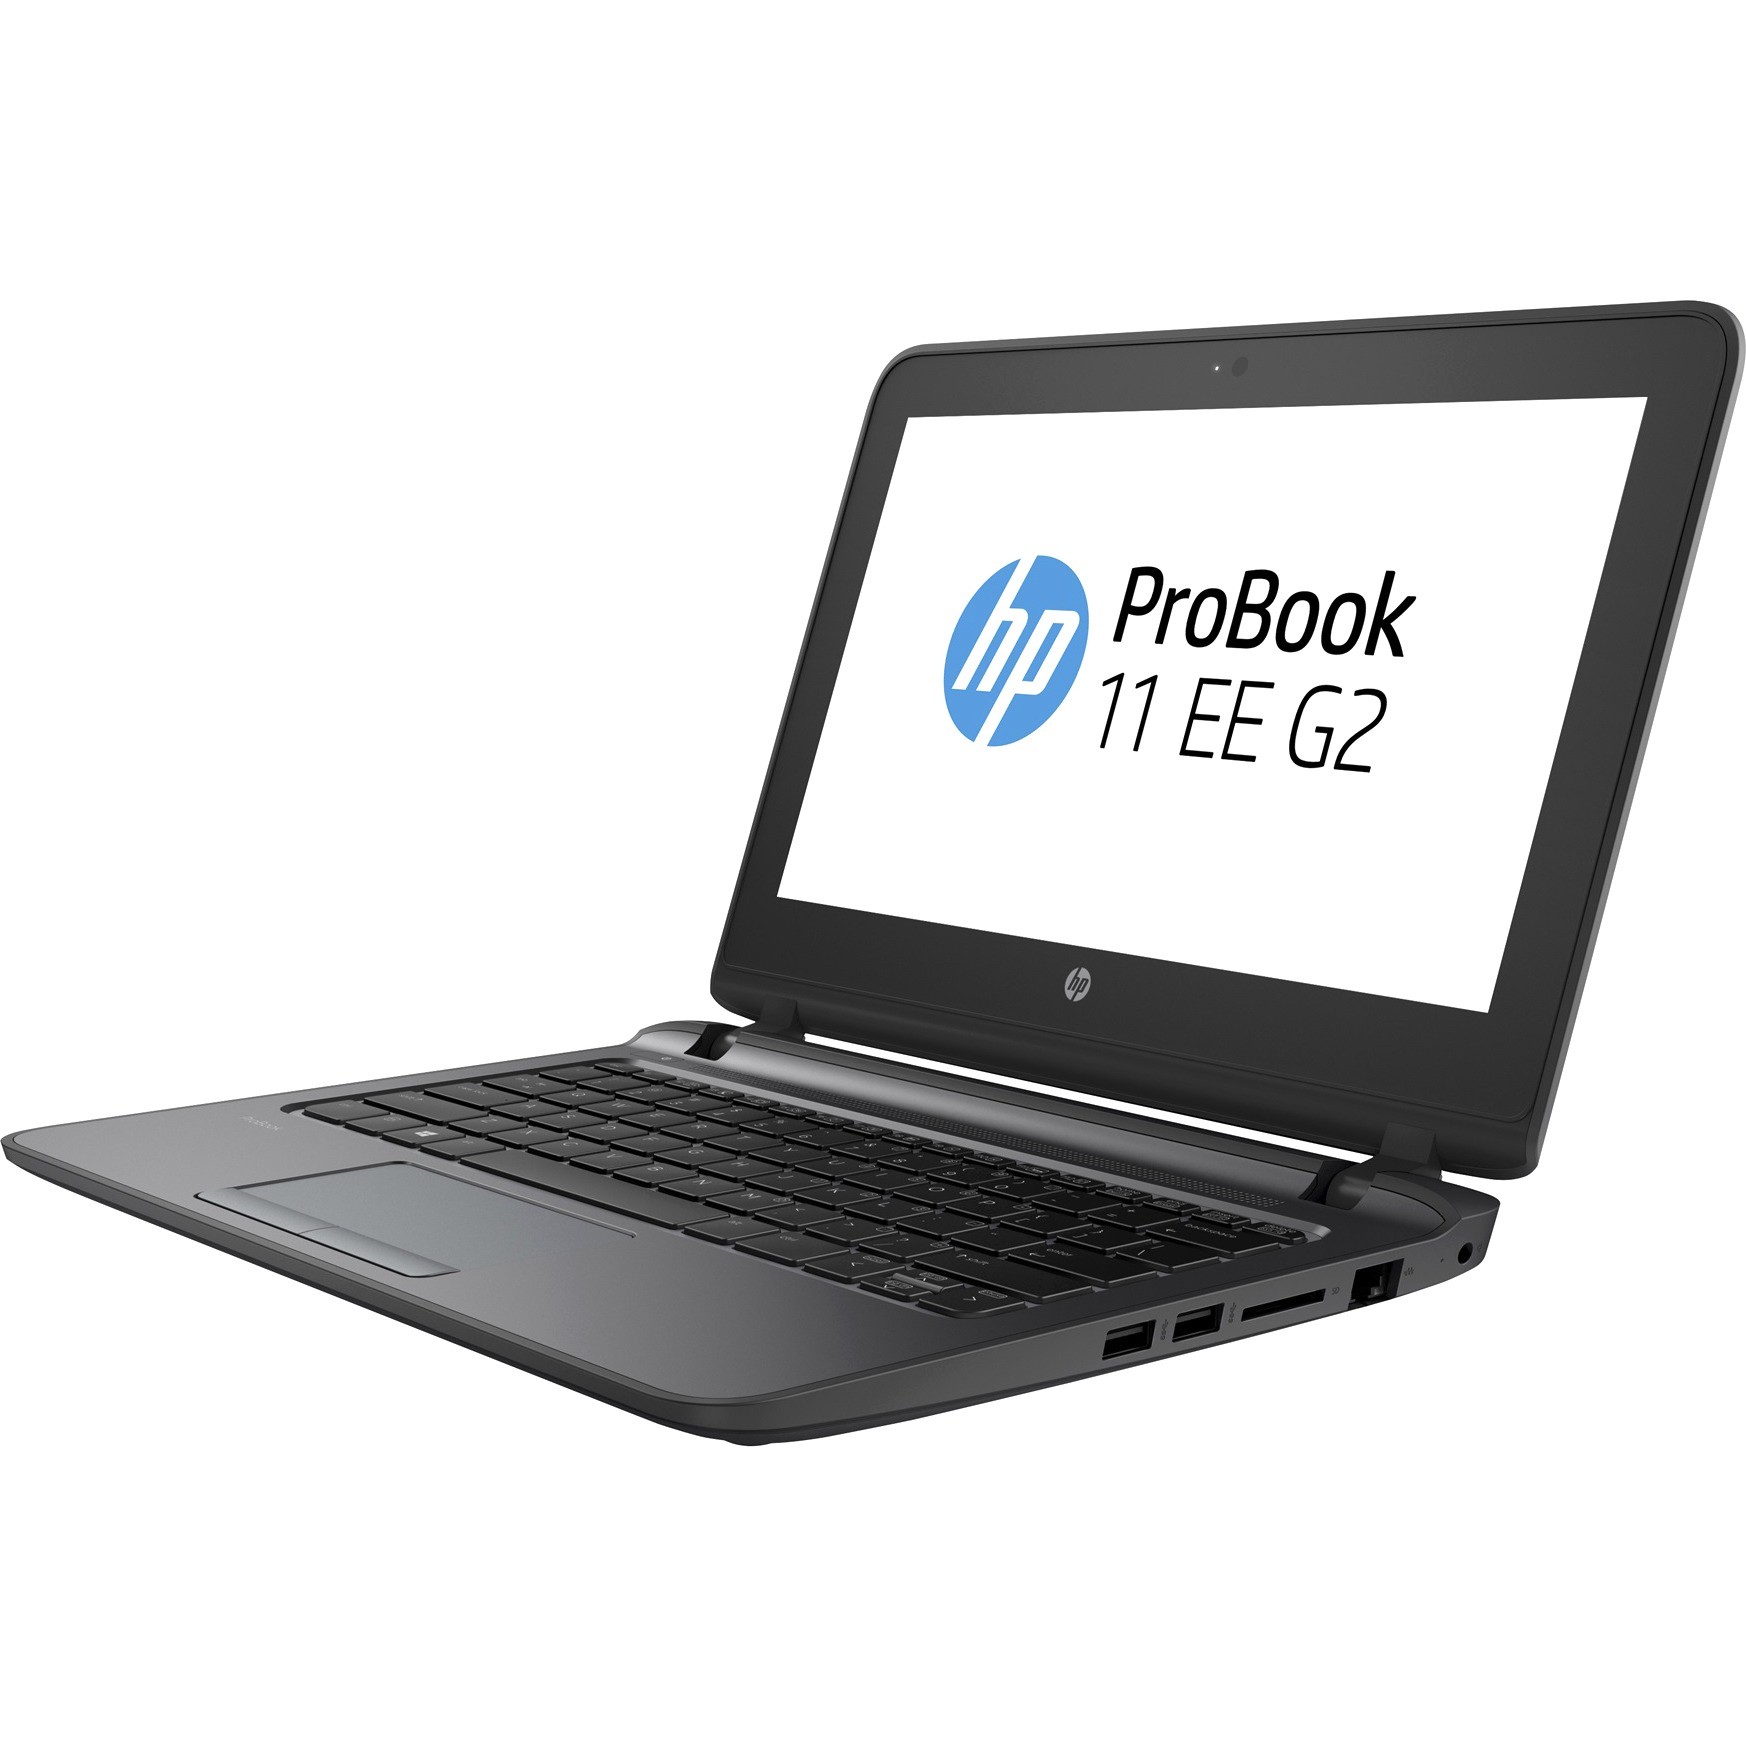 HP V2W50UTABA  Smart Buy ProBook 11 EE G2 3855U 1.6GHz 4GB 500G W7P64/Windows 10 11.6" 1-Year